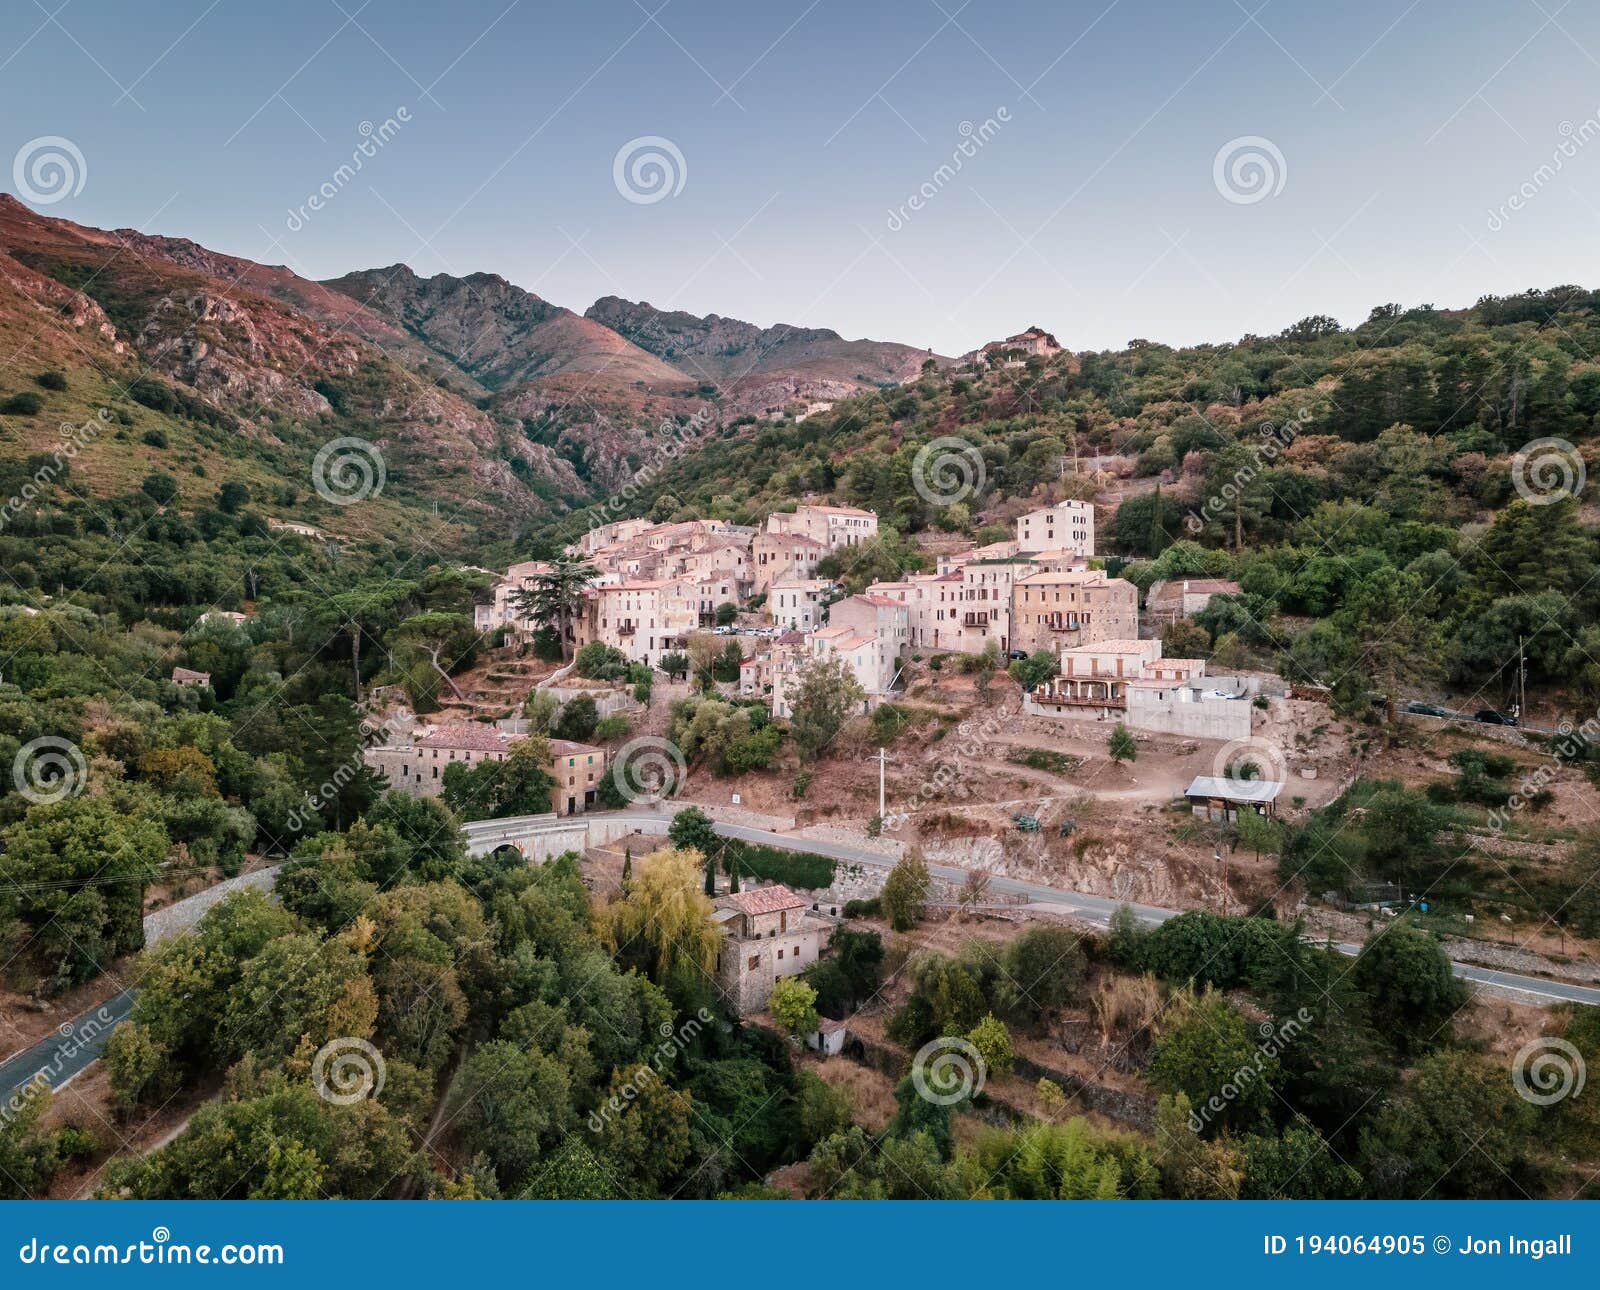 mountain village of ville di paraso in corsica